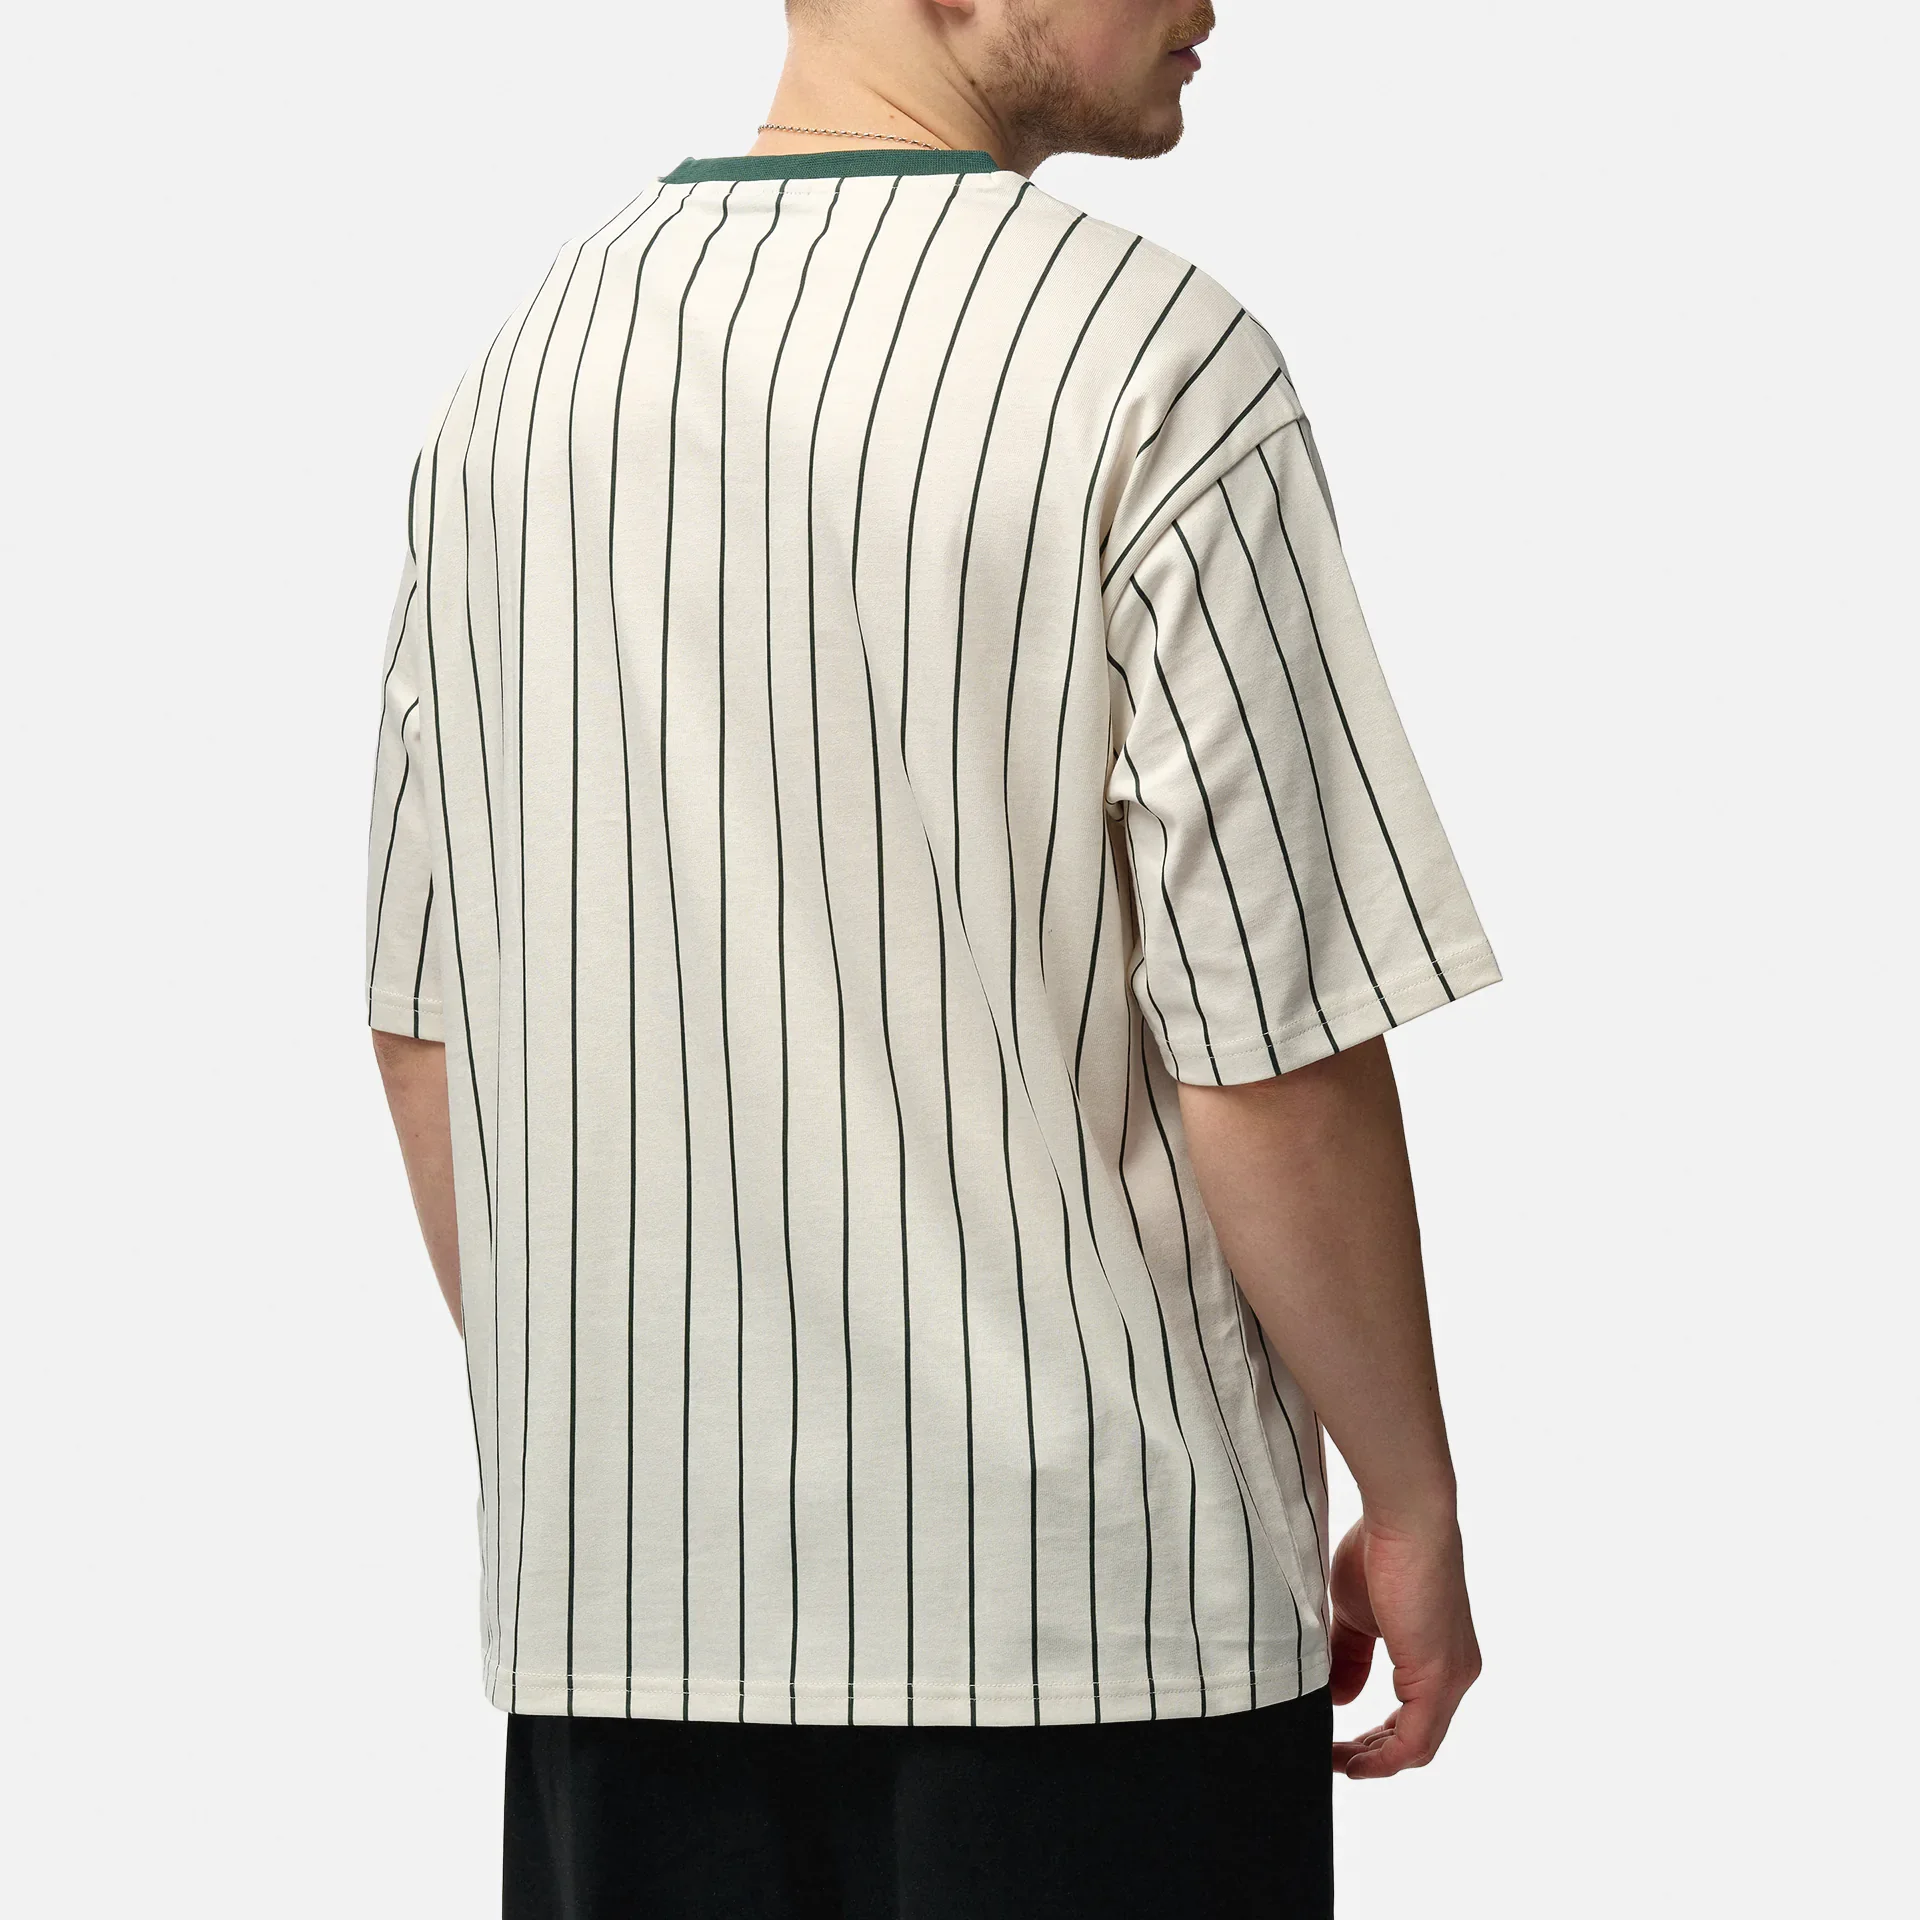 New Era Pinstripe Oversize T-Shirt Off White/Dark Green